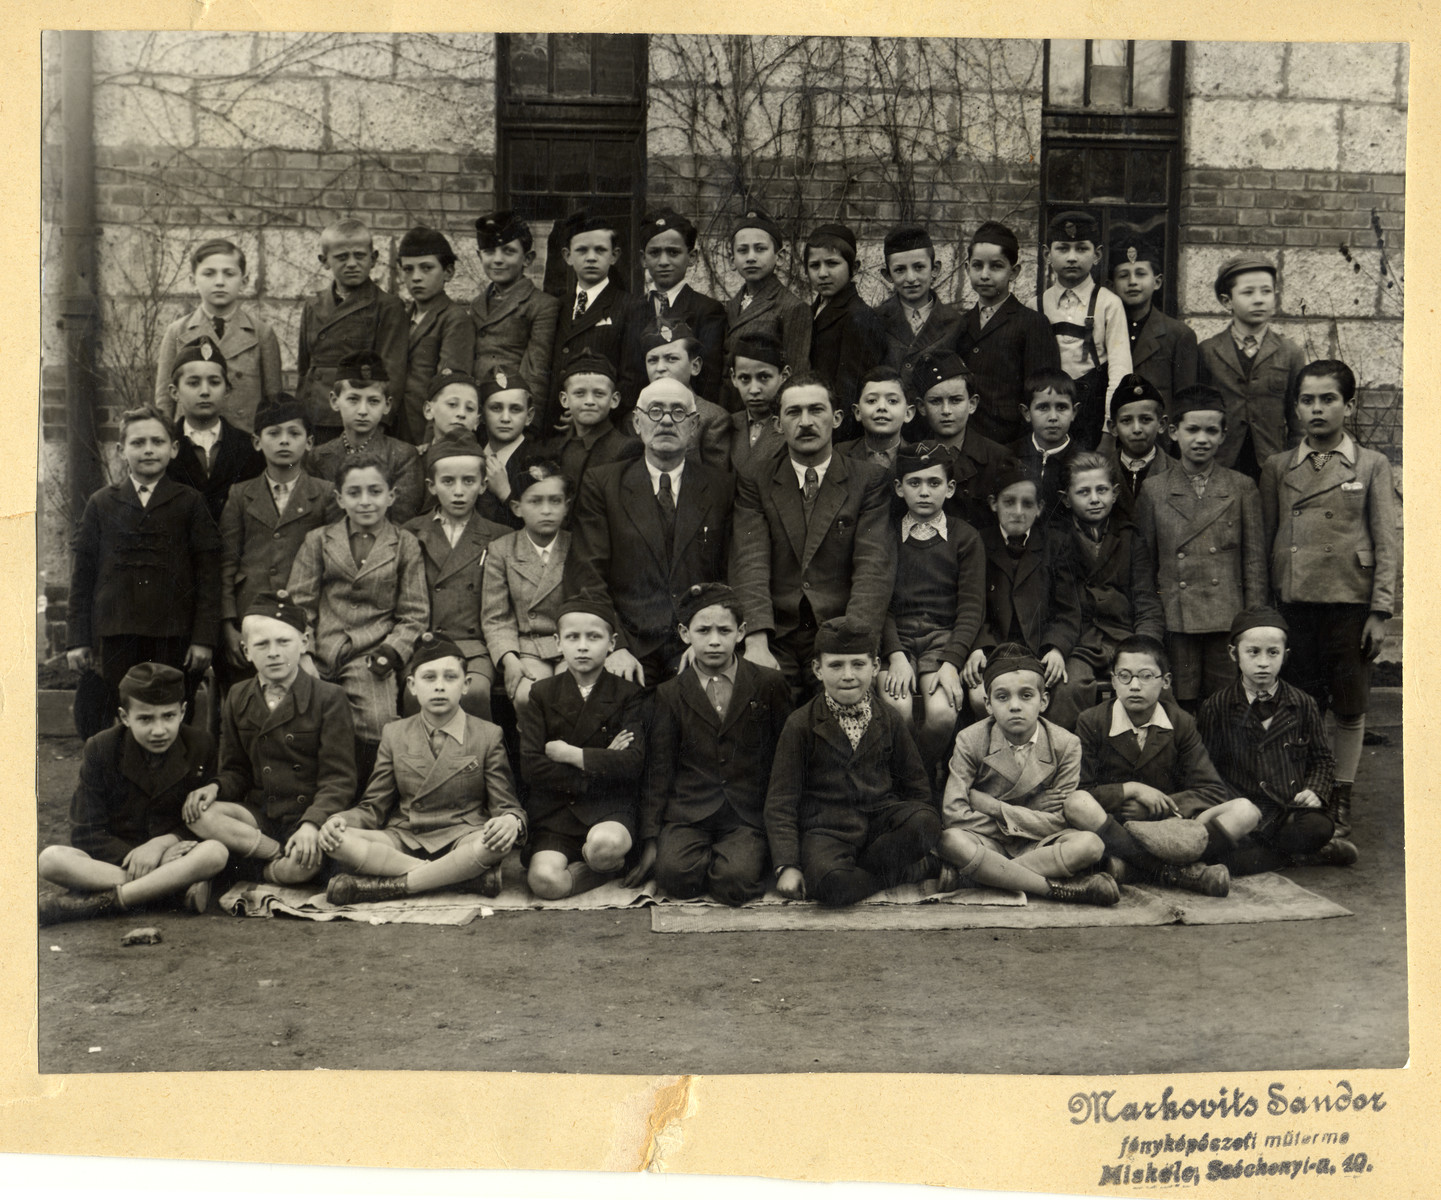 Class portrait of the fourth grade of the Erszebet Izraelita Elemi Iskola (the Jewish elementary school) in Miskolc.

Most of the students perished two years later.
Pictured are (top row): Gyorgy Czeisler, Laszlo Groszman, Imre Wruszerbai, Andor Weisz, Erno Neuwalder, Gyorgy Adorjan, Dezso Markovits, Lajos Gotlib, Miklos Herskovits, Gyorgy Varadi, Peter Bonis, Jeno Schlezinger, and Salamon Silberman.  Third row: Erno Roth, Laszlo Schwarz, Istvan Bornstein, Istvan Ronai, Zoltan Klein, Miklos Rosenberg, Pal Mandel, Laszlo Markusz, Erno Deutsch, Erno Pugacs, Erno Lichner, Sandor Lusztig, and Arthur Ungar. Second row: Adolf Roth, Jozsef Komlos, Marton Lefkovits, Miklos Zsupnik. Istvan Feig, Bertalan Hauer (school principal), Jozsef Buxbaum (teacher), Janos Kovacs, Gyorgy Weisz, and Tibor Markusz.  Front row: Abel Winger, Gyozo Kohn, Pal Kovacs, Laszlo Goldstein, Miklos Schoenbrun, Gyla Gruen, Lazar Preisz, Pal Rozenfeld and Sandor Stern.